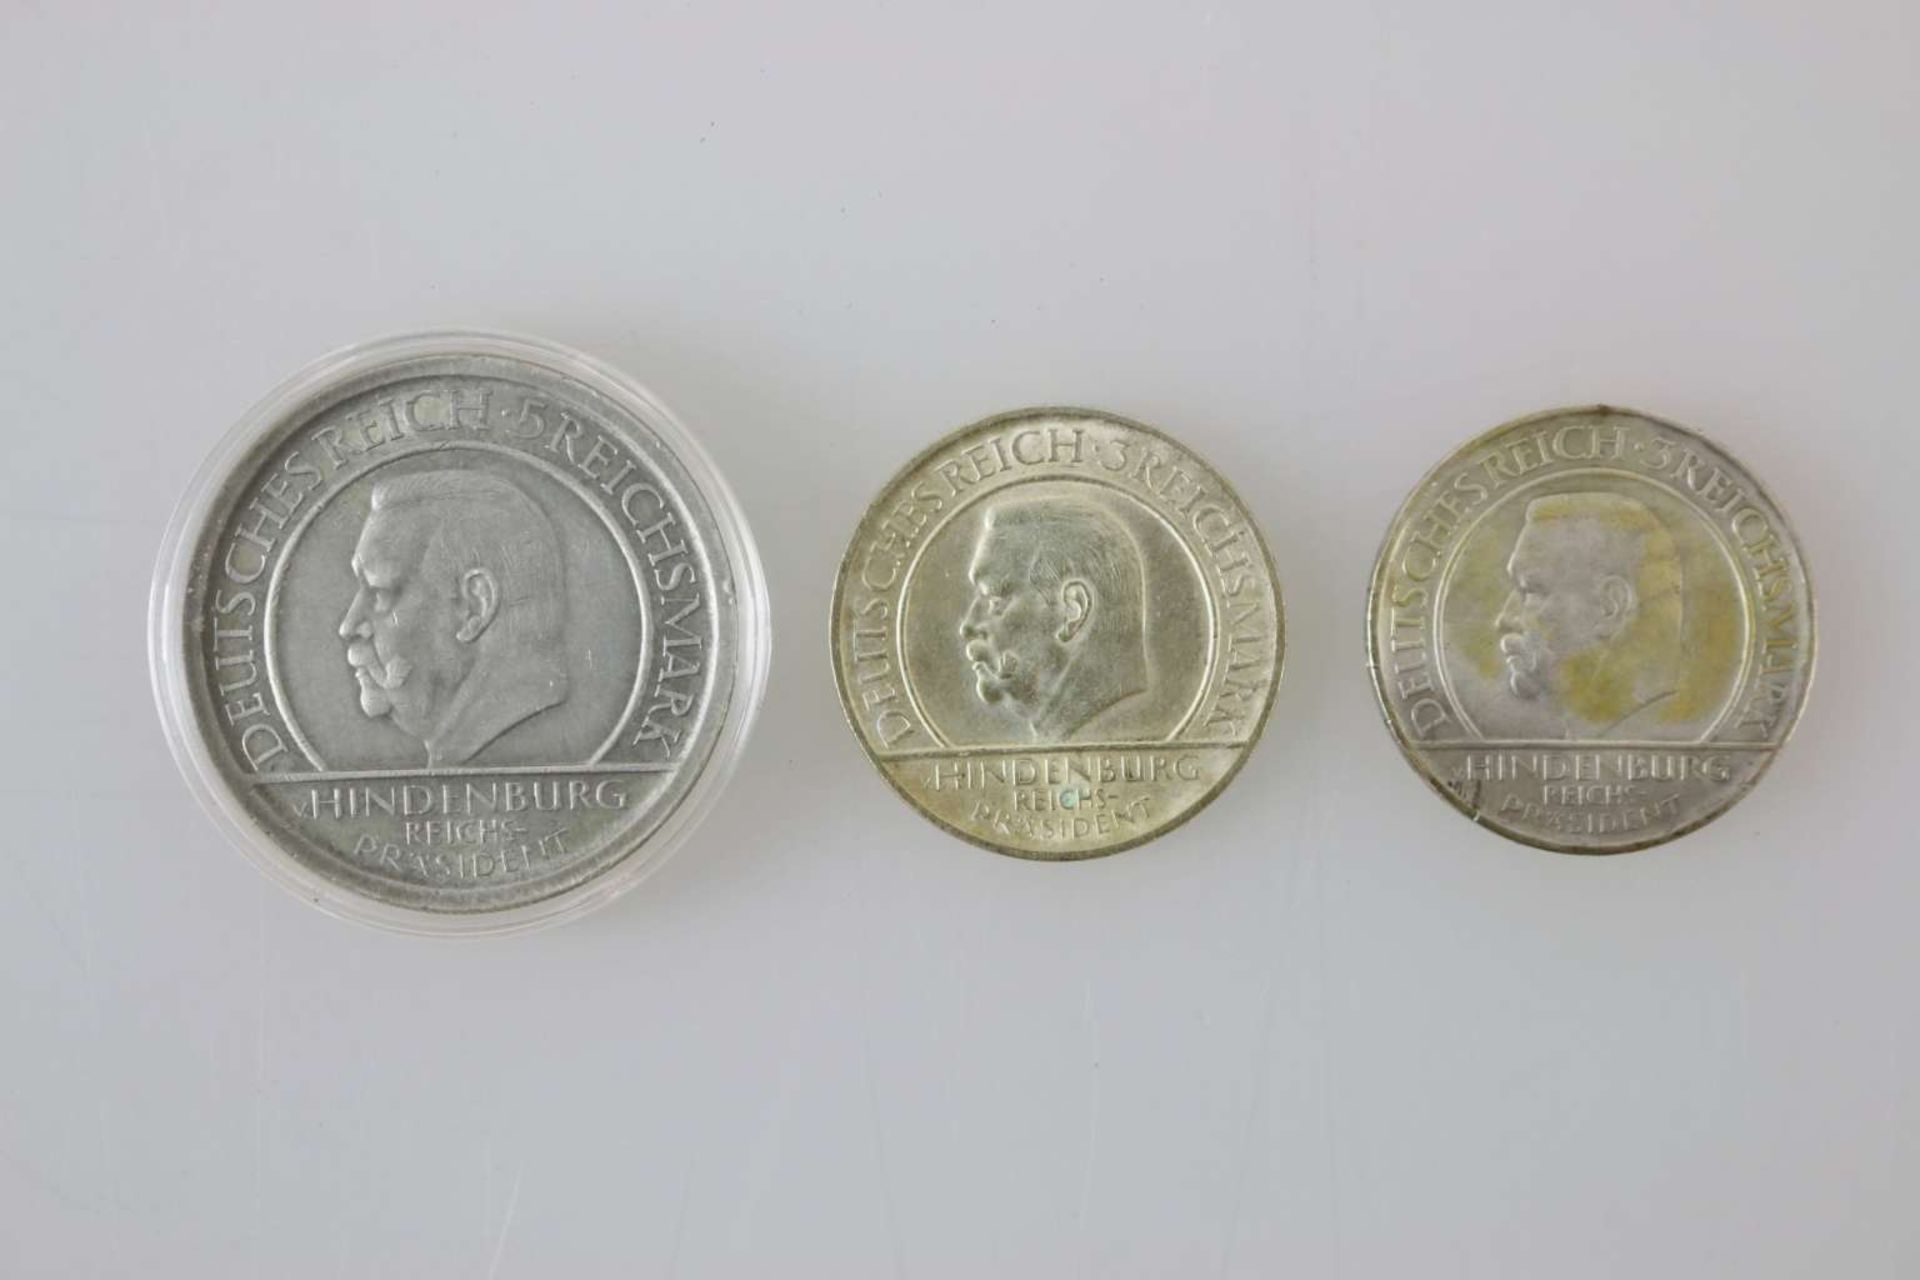 Weimarer Republik, 3 Silber Gedenkmünzen - Image 2 of 2